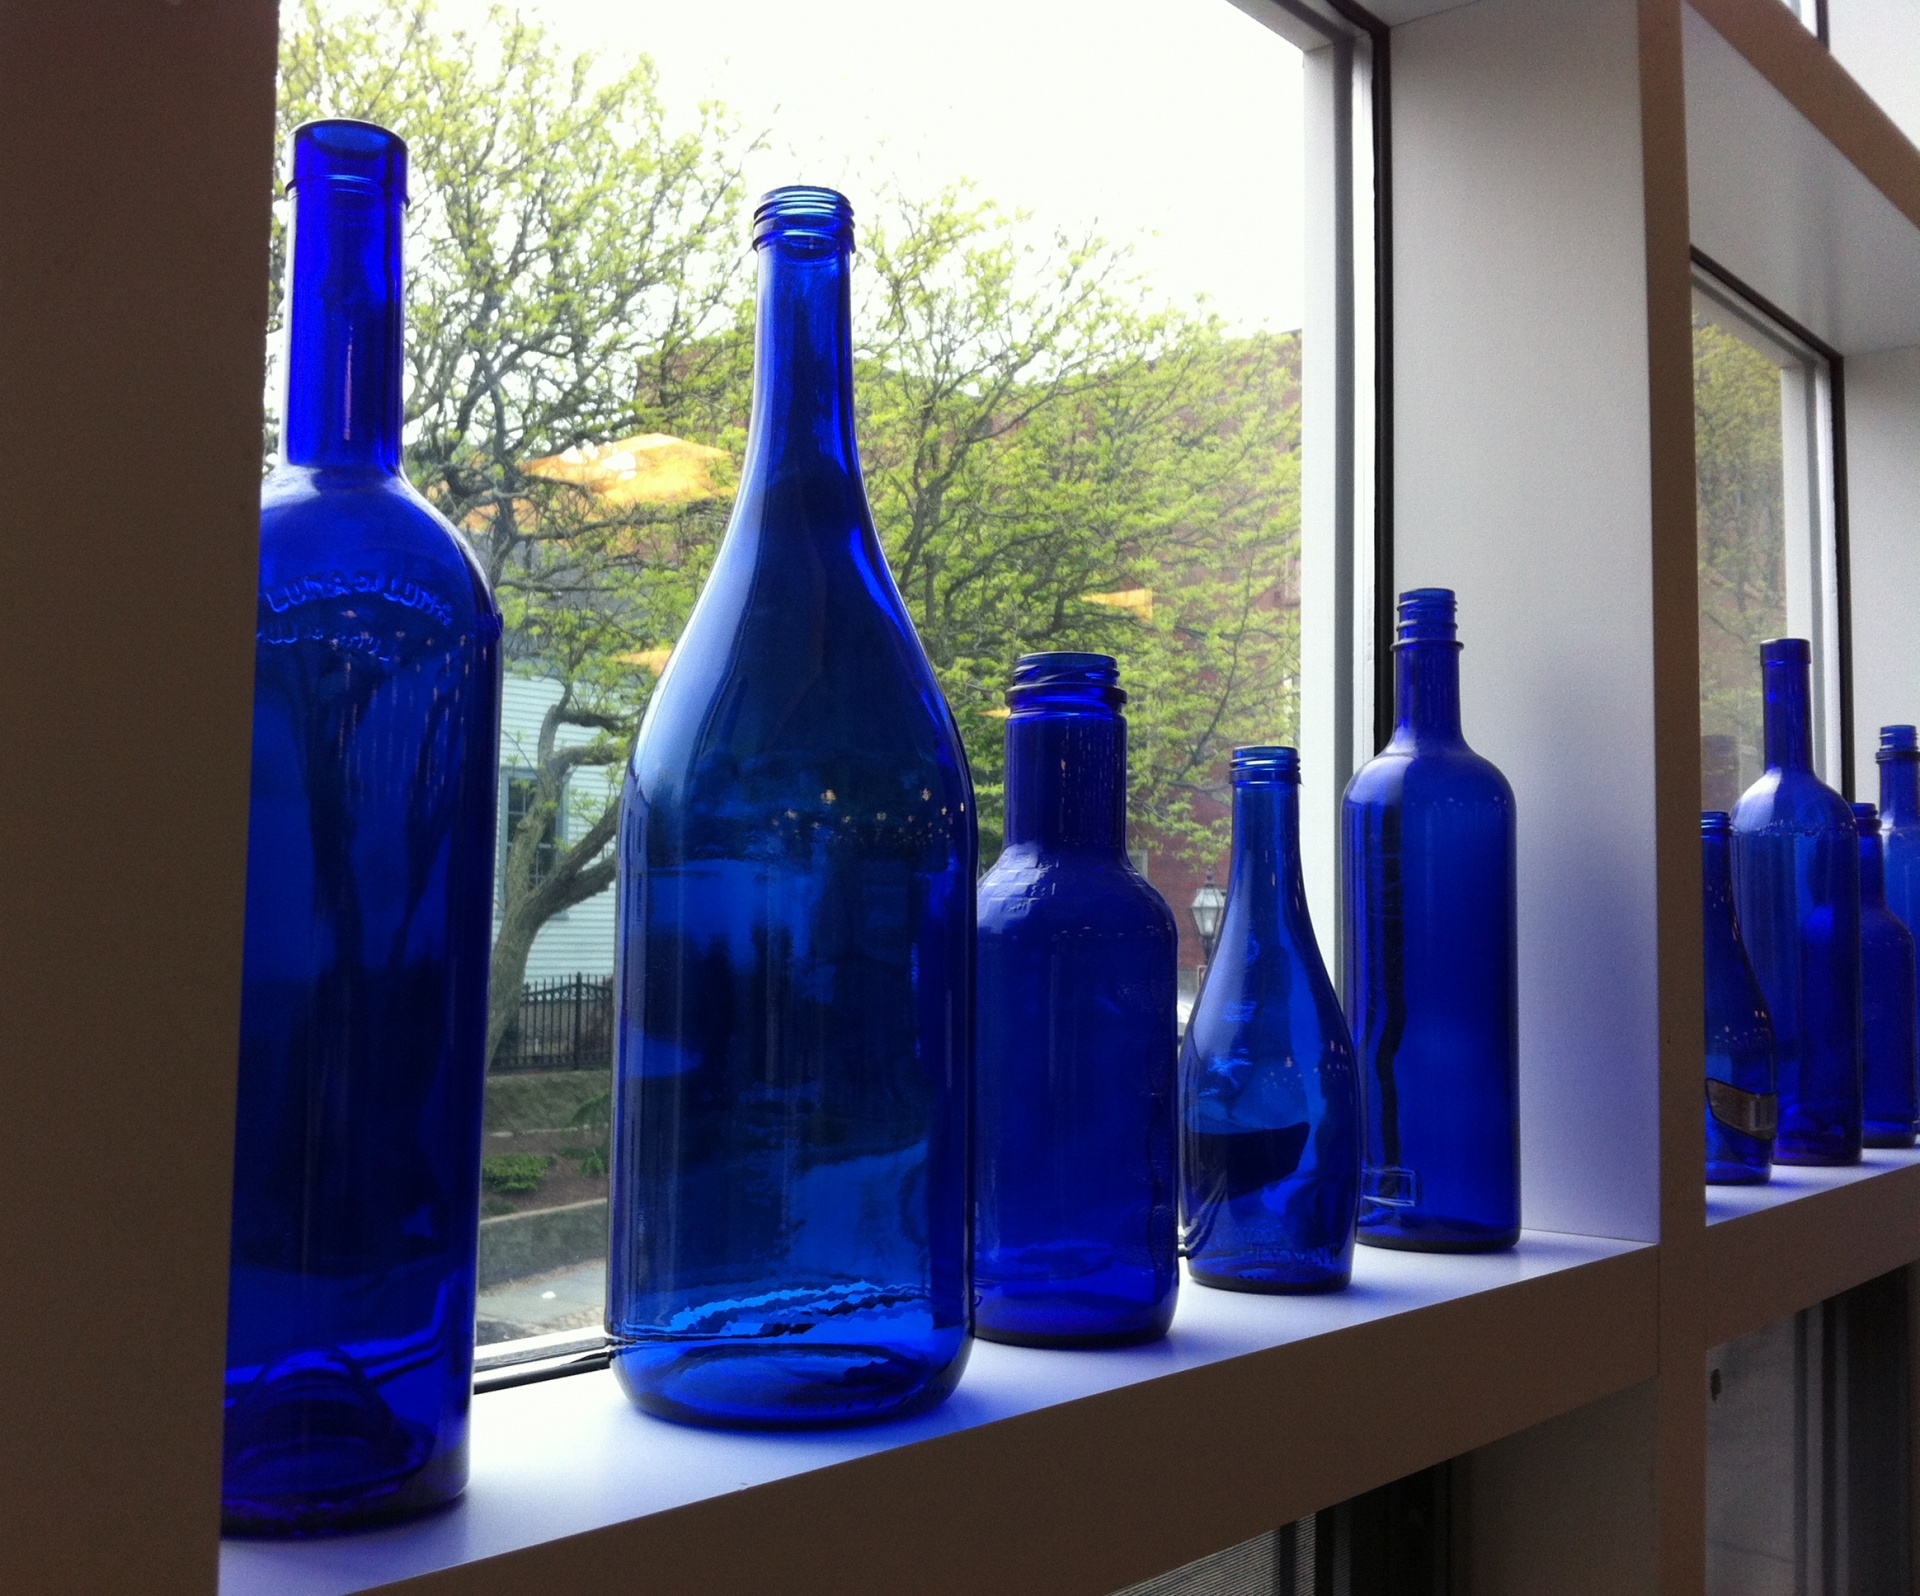 Blue bottles along the window sill